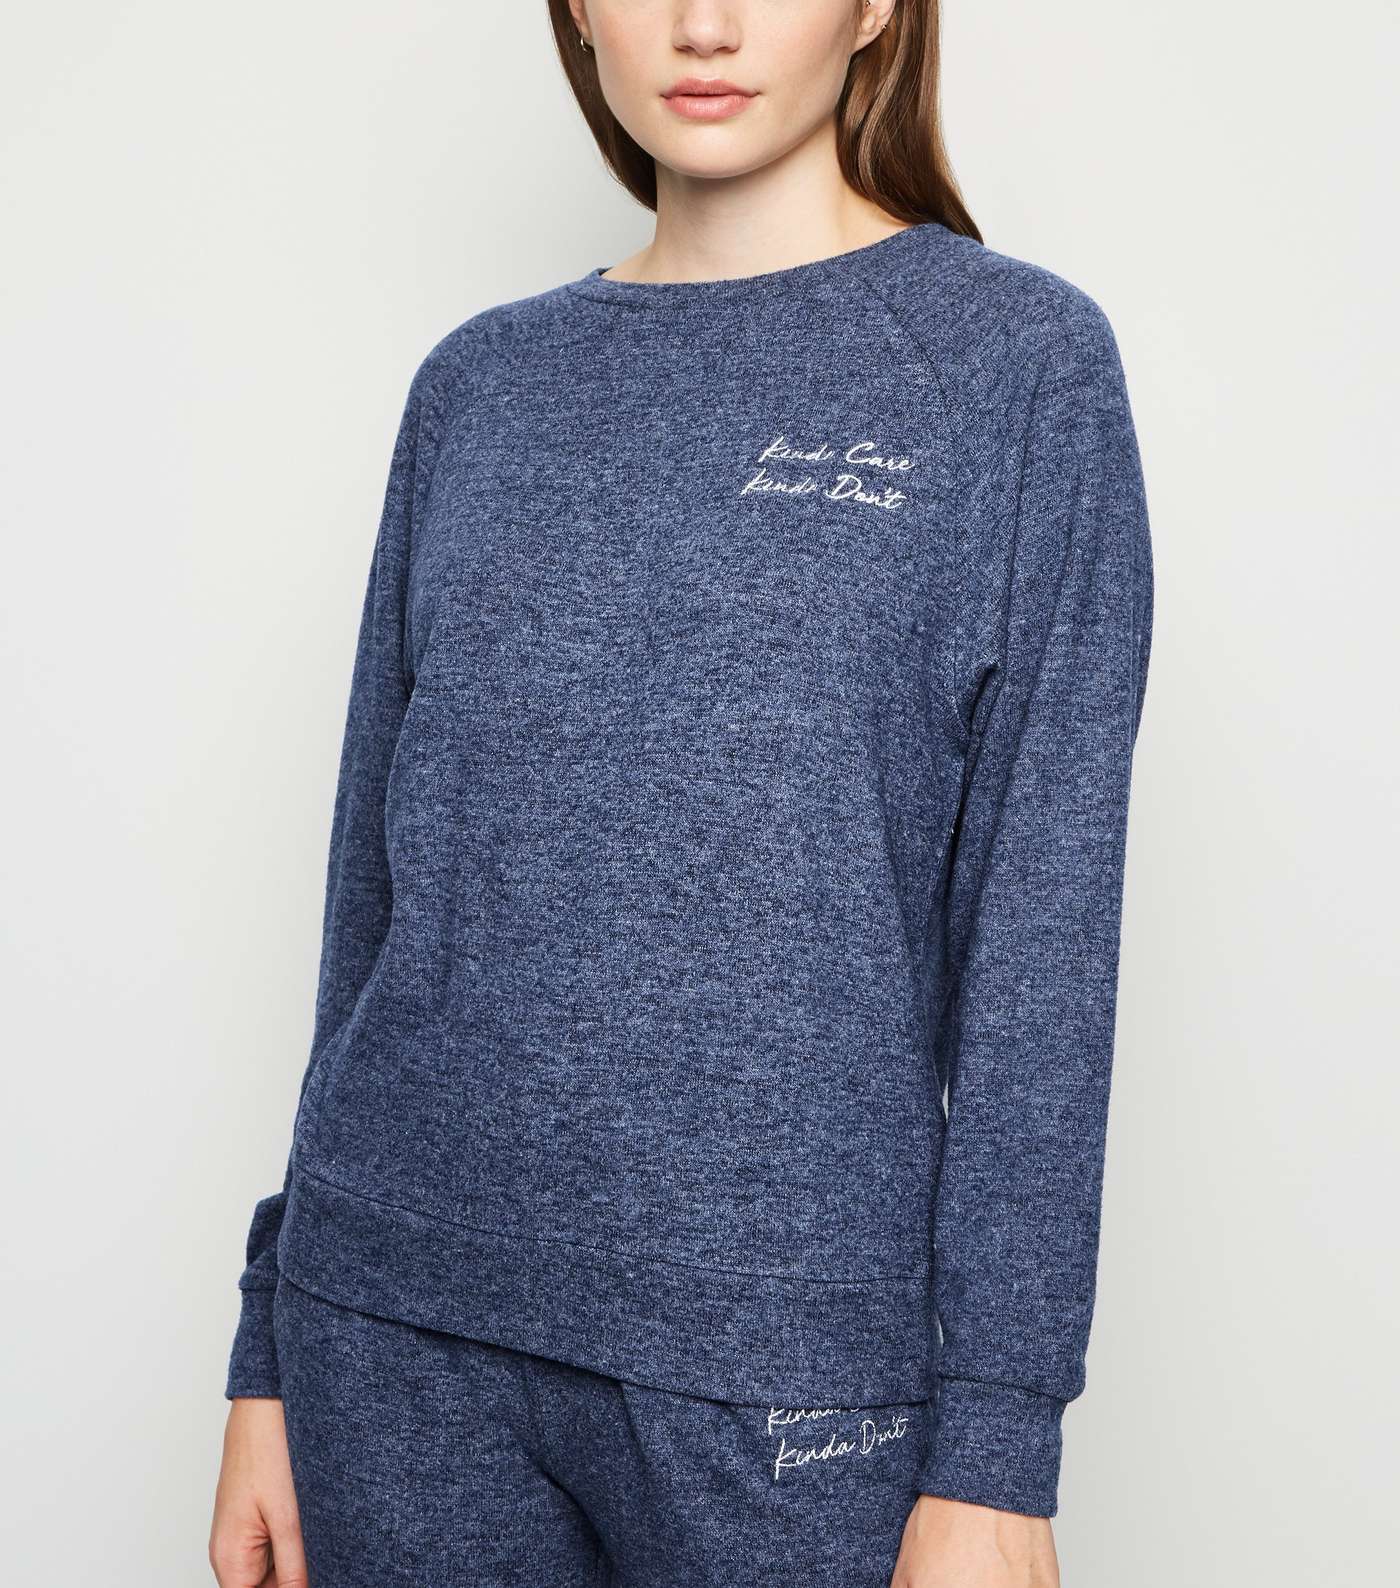 Blue Kinda Care Slogan Pyjama Sweatshirt